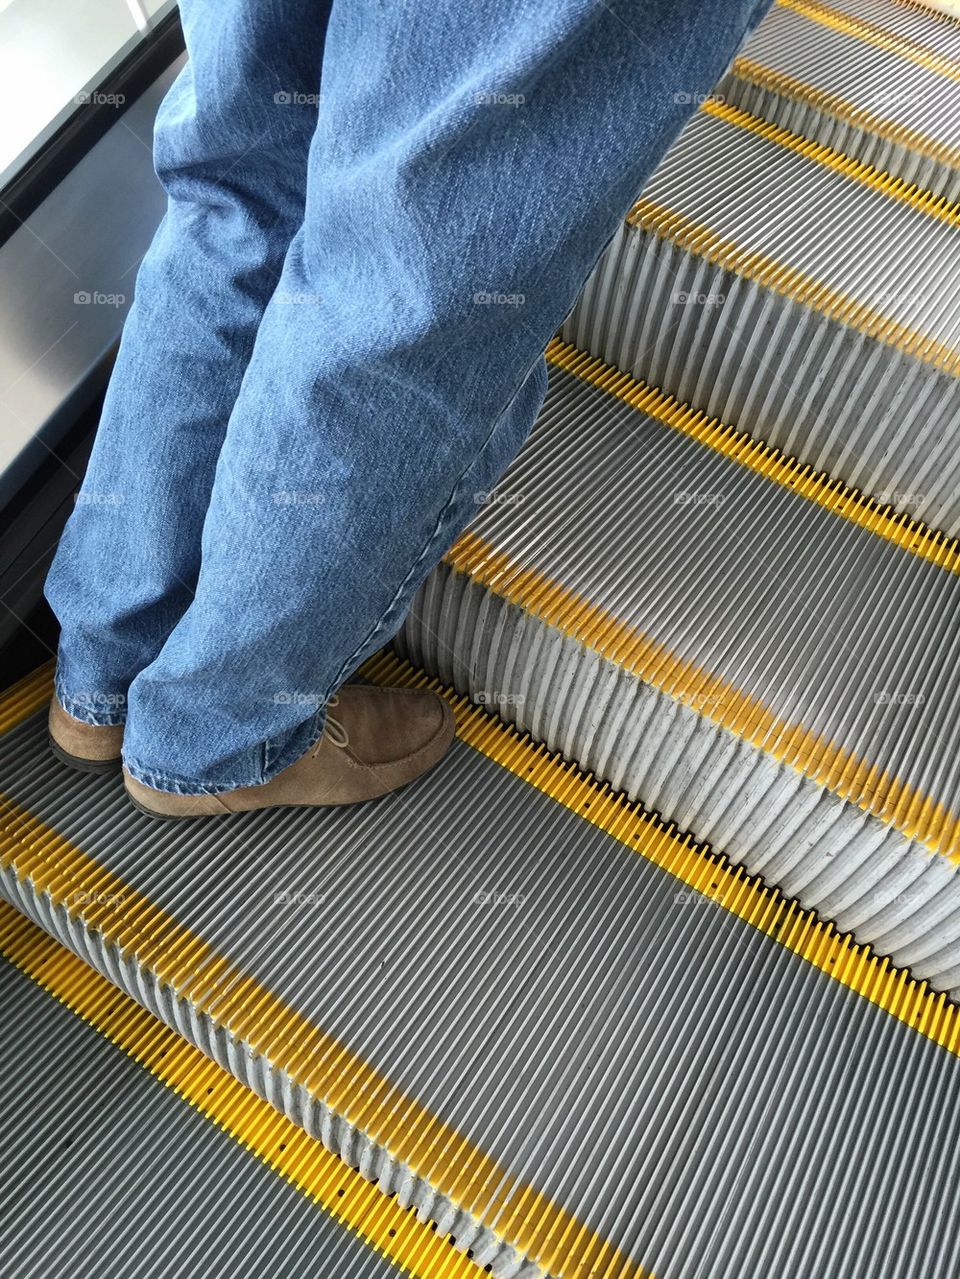 Man going up escalator